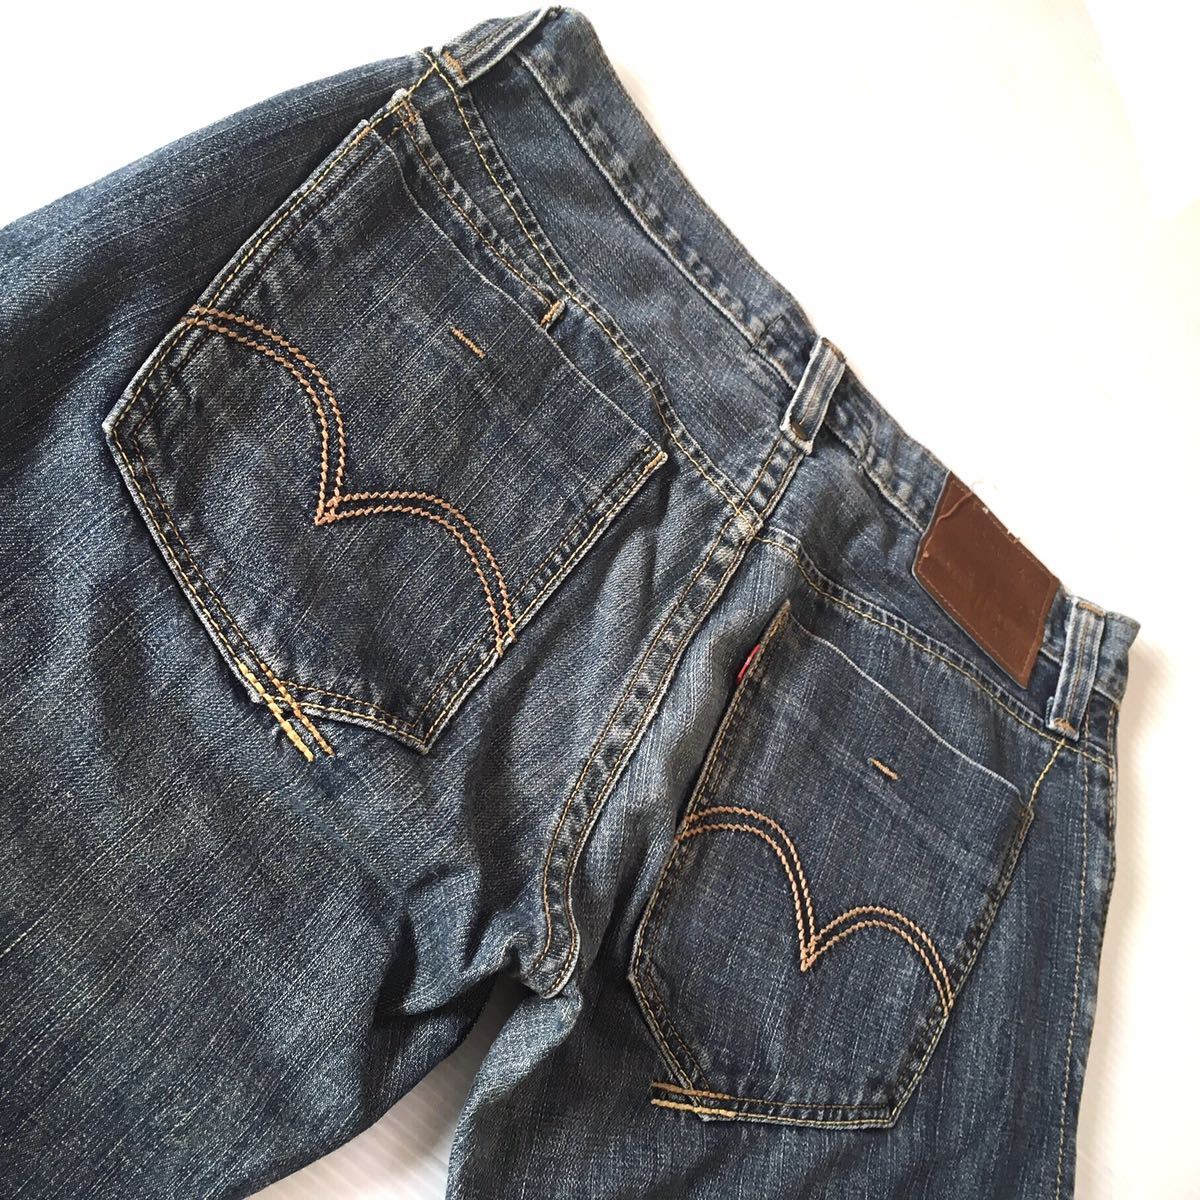 ★☆W32inch=81.28cm☆★Levi's514 Damage Design Jeans★☆異色系立体裁断Denim☆★_画像4